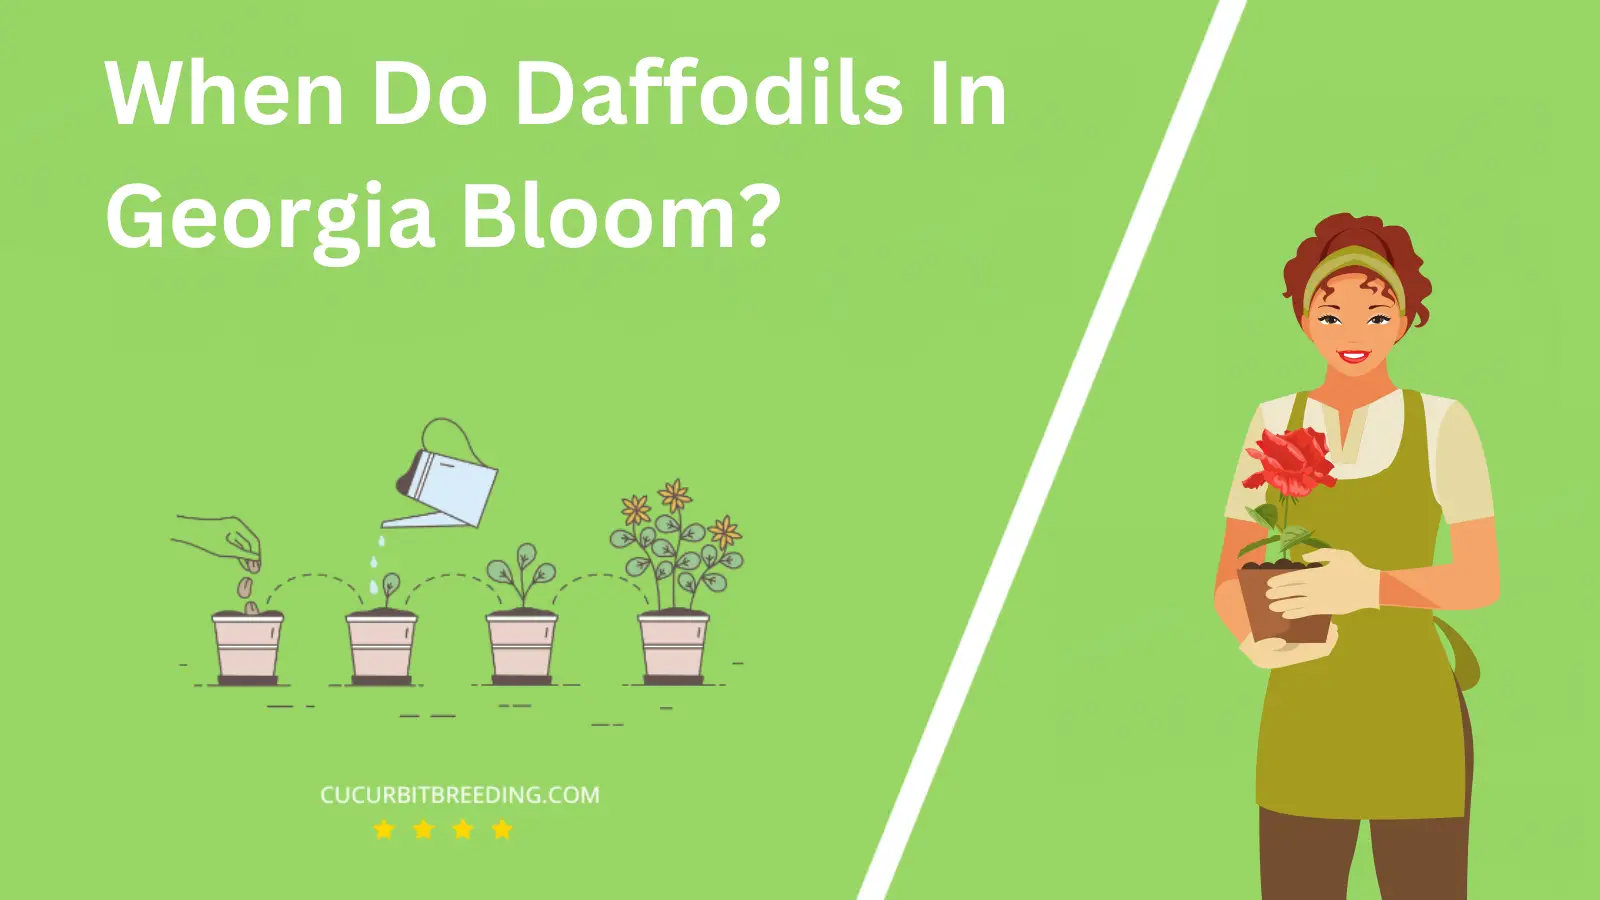 When Do Daffodils In Georgia Bloom?